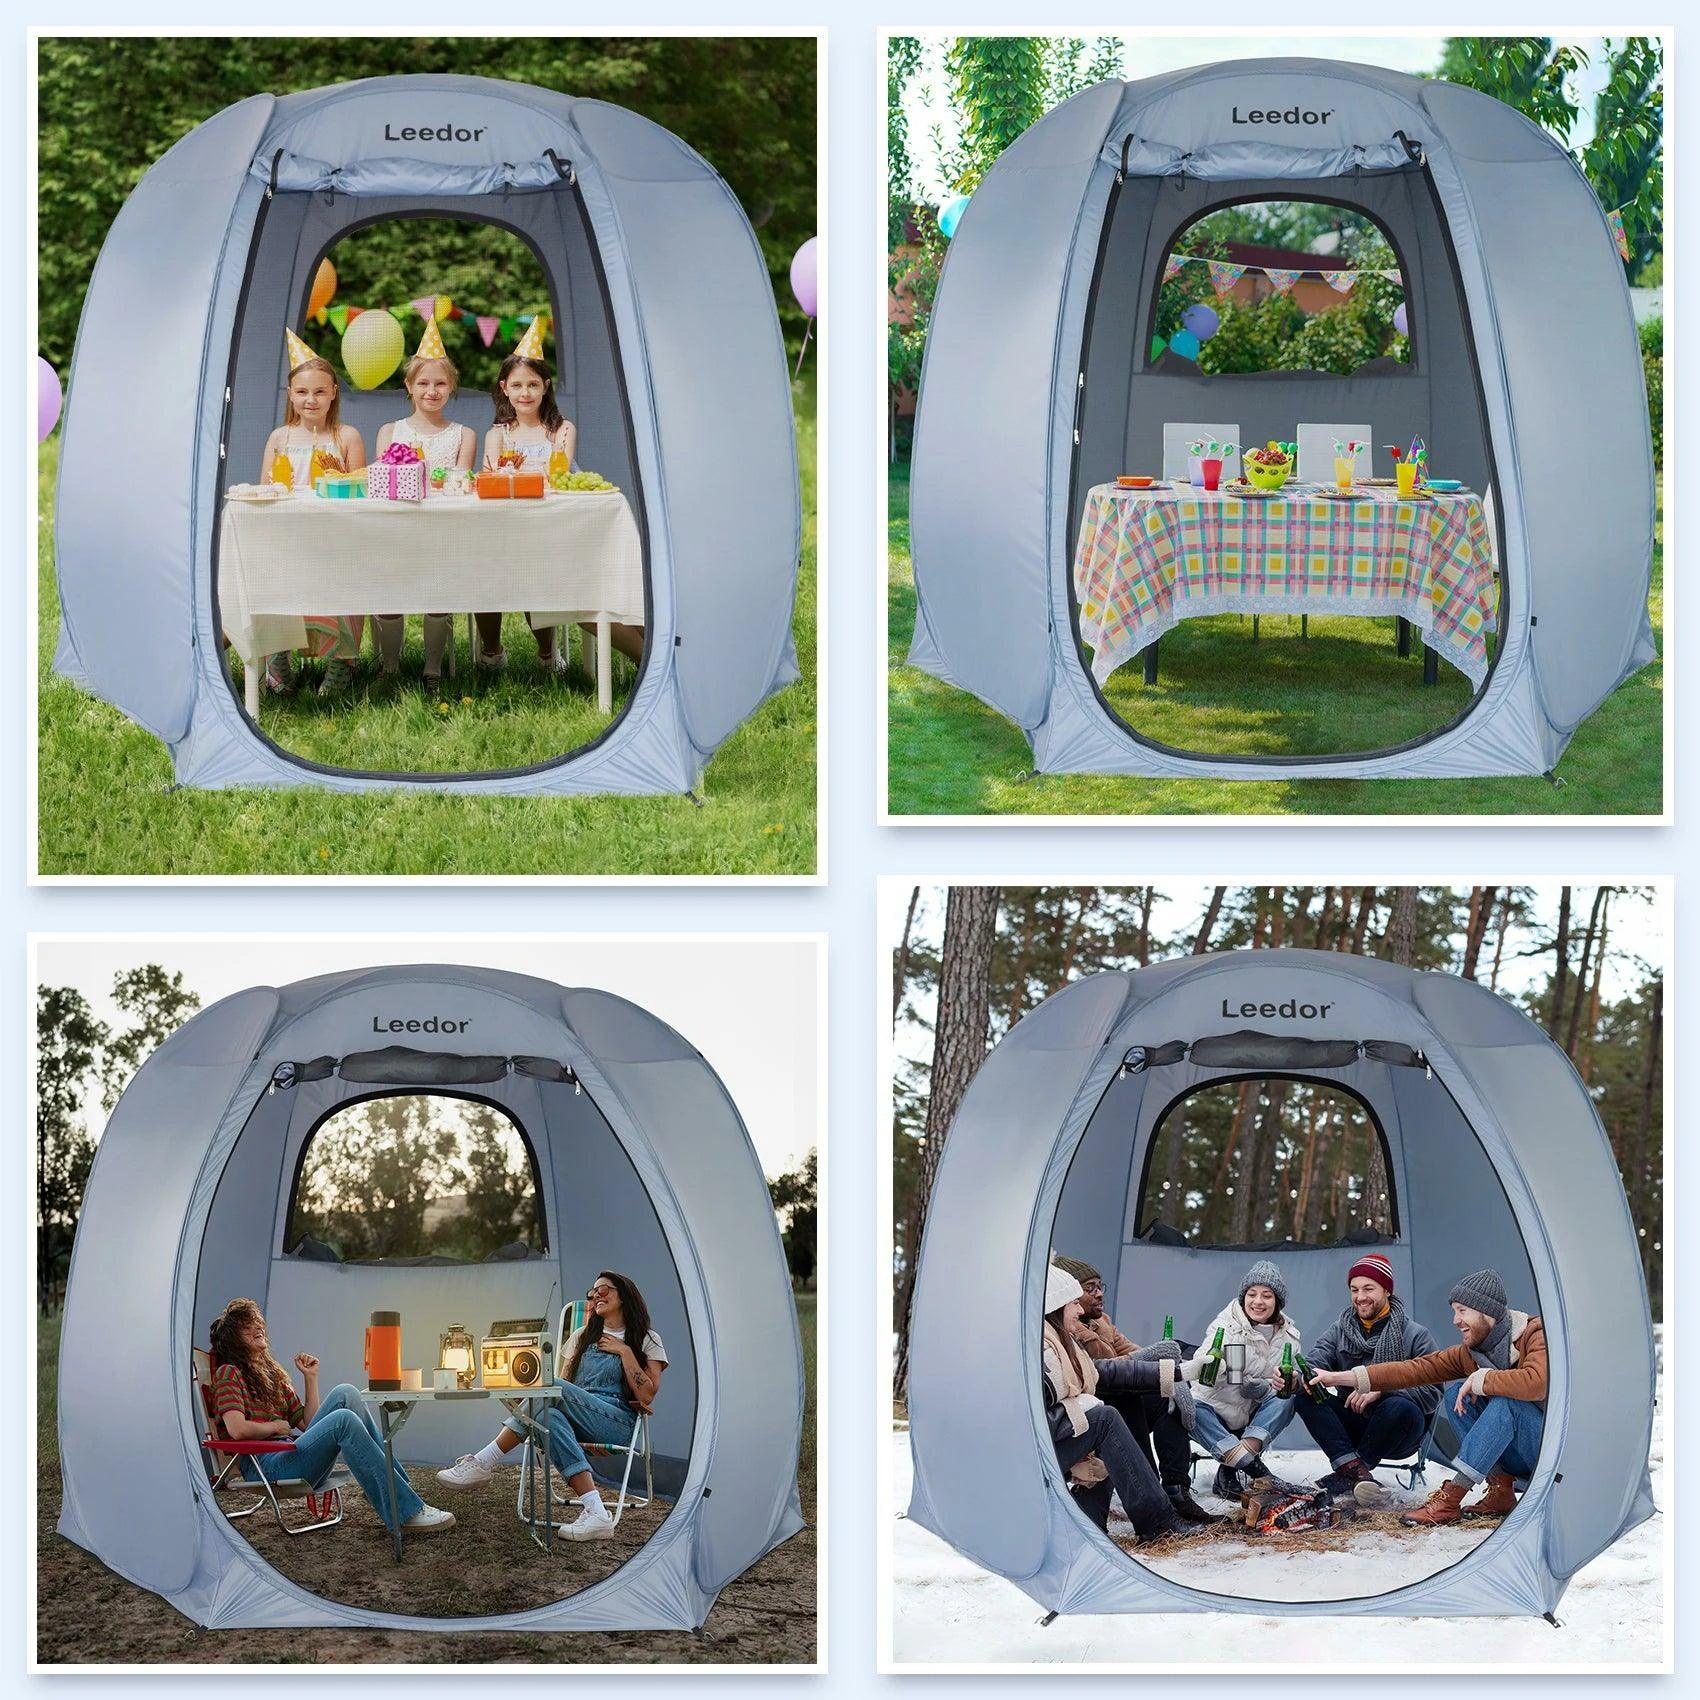 Versatile four-season tent suitable for all outdoor activities